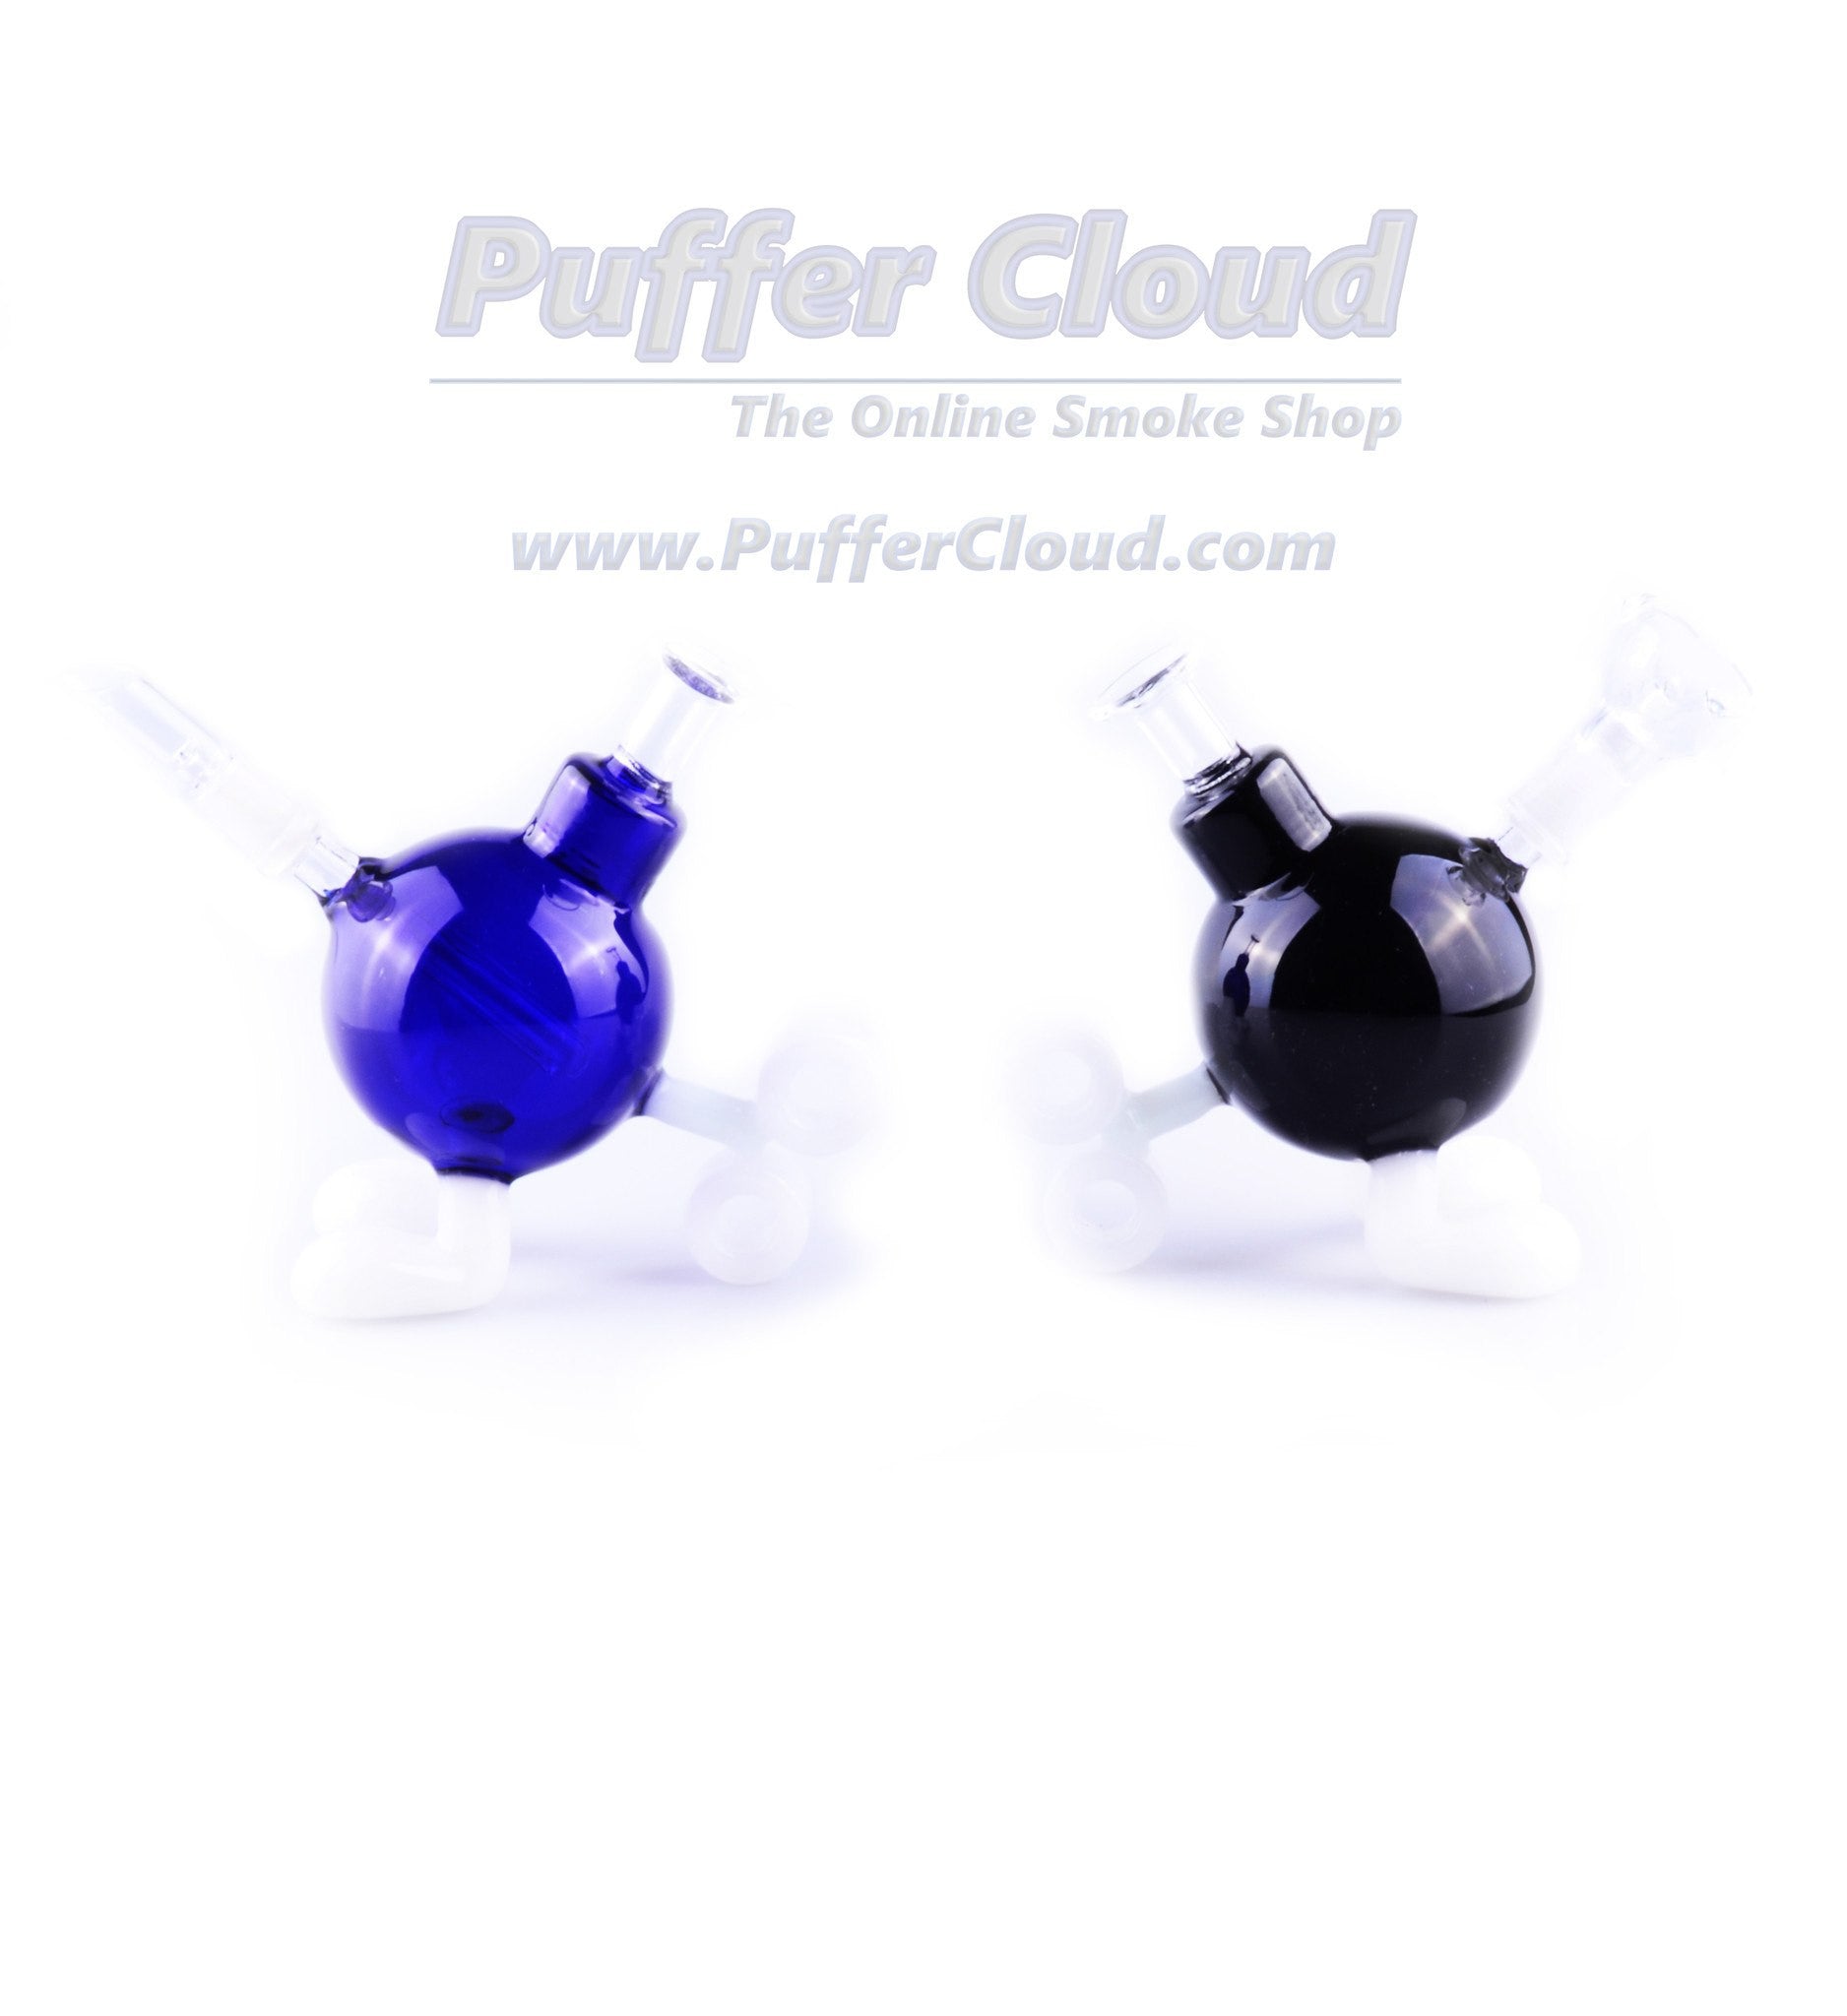 Bomb Bubbler - Puffer Cloud | The World's Best Online Smoke and Head Shop